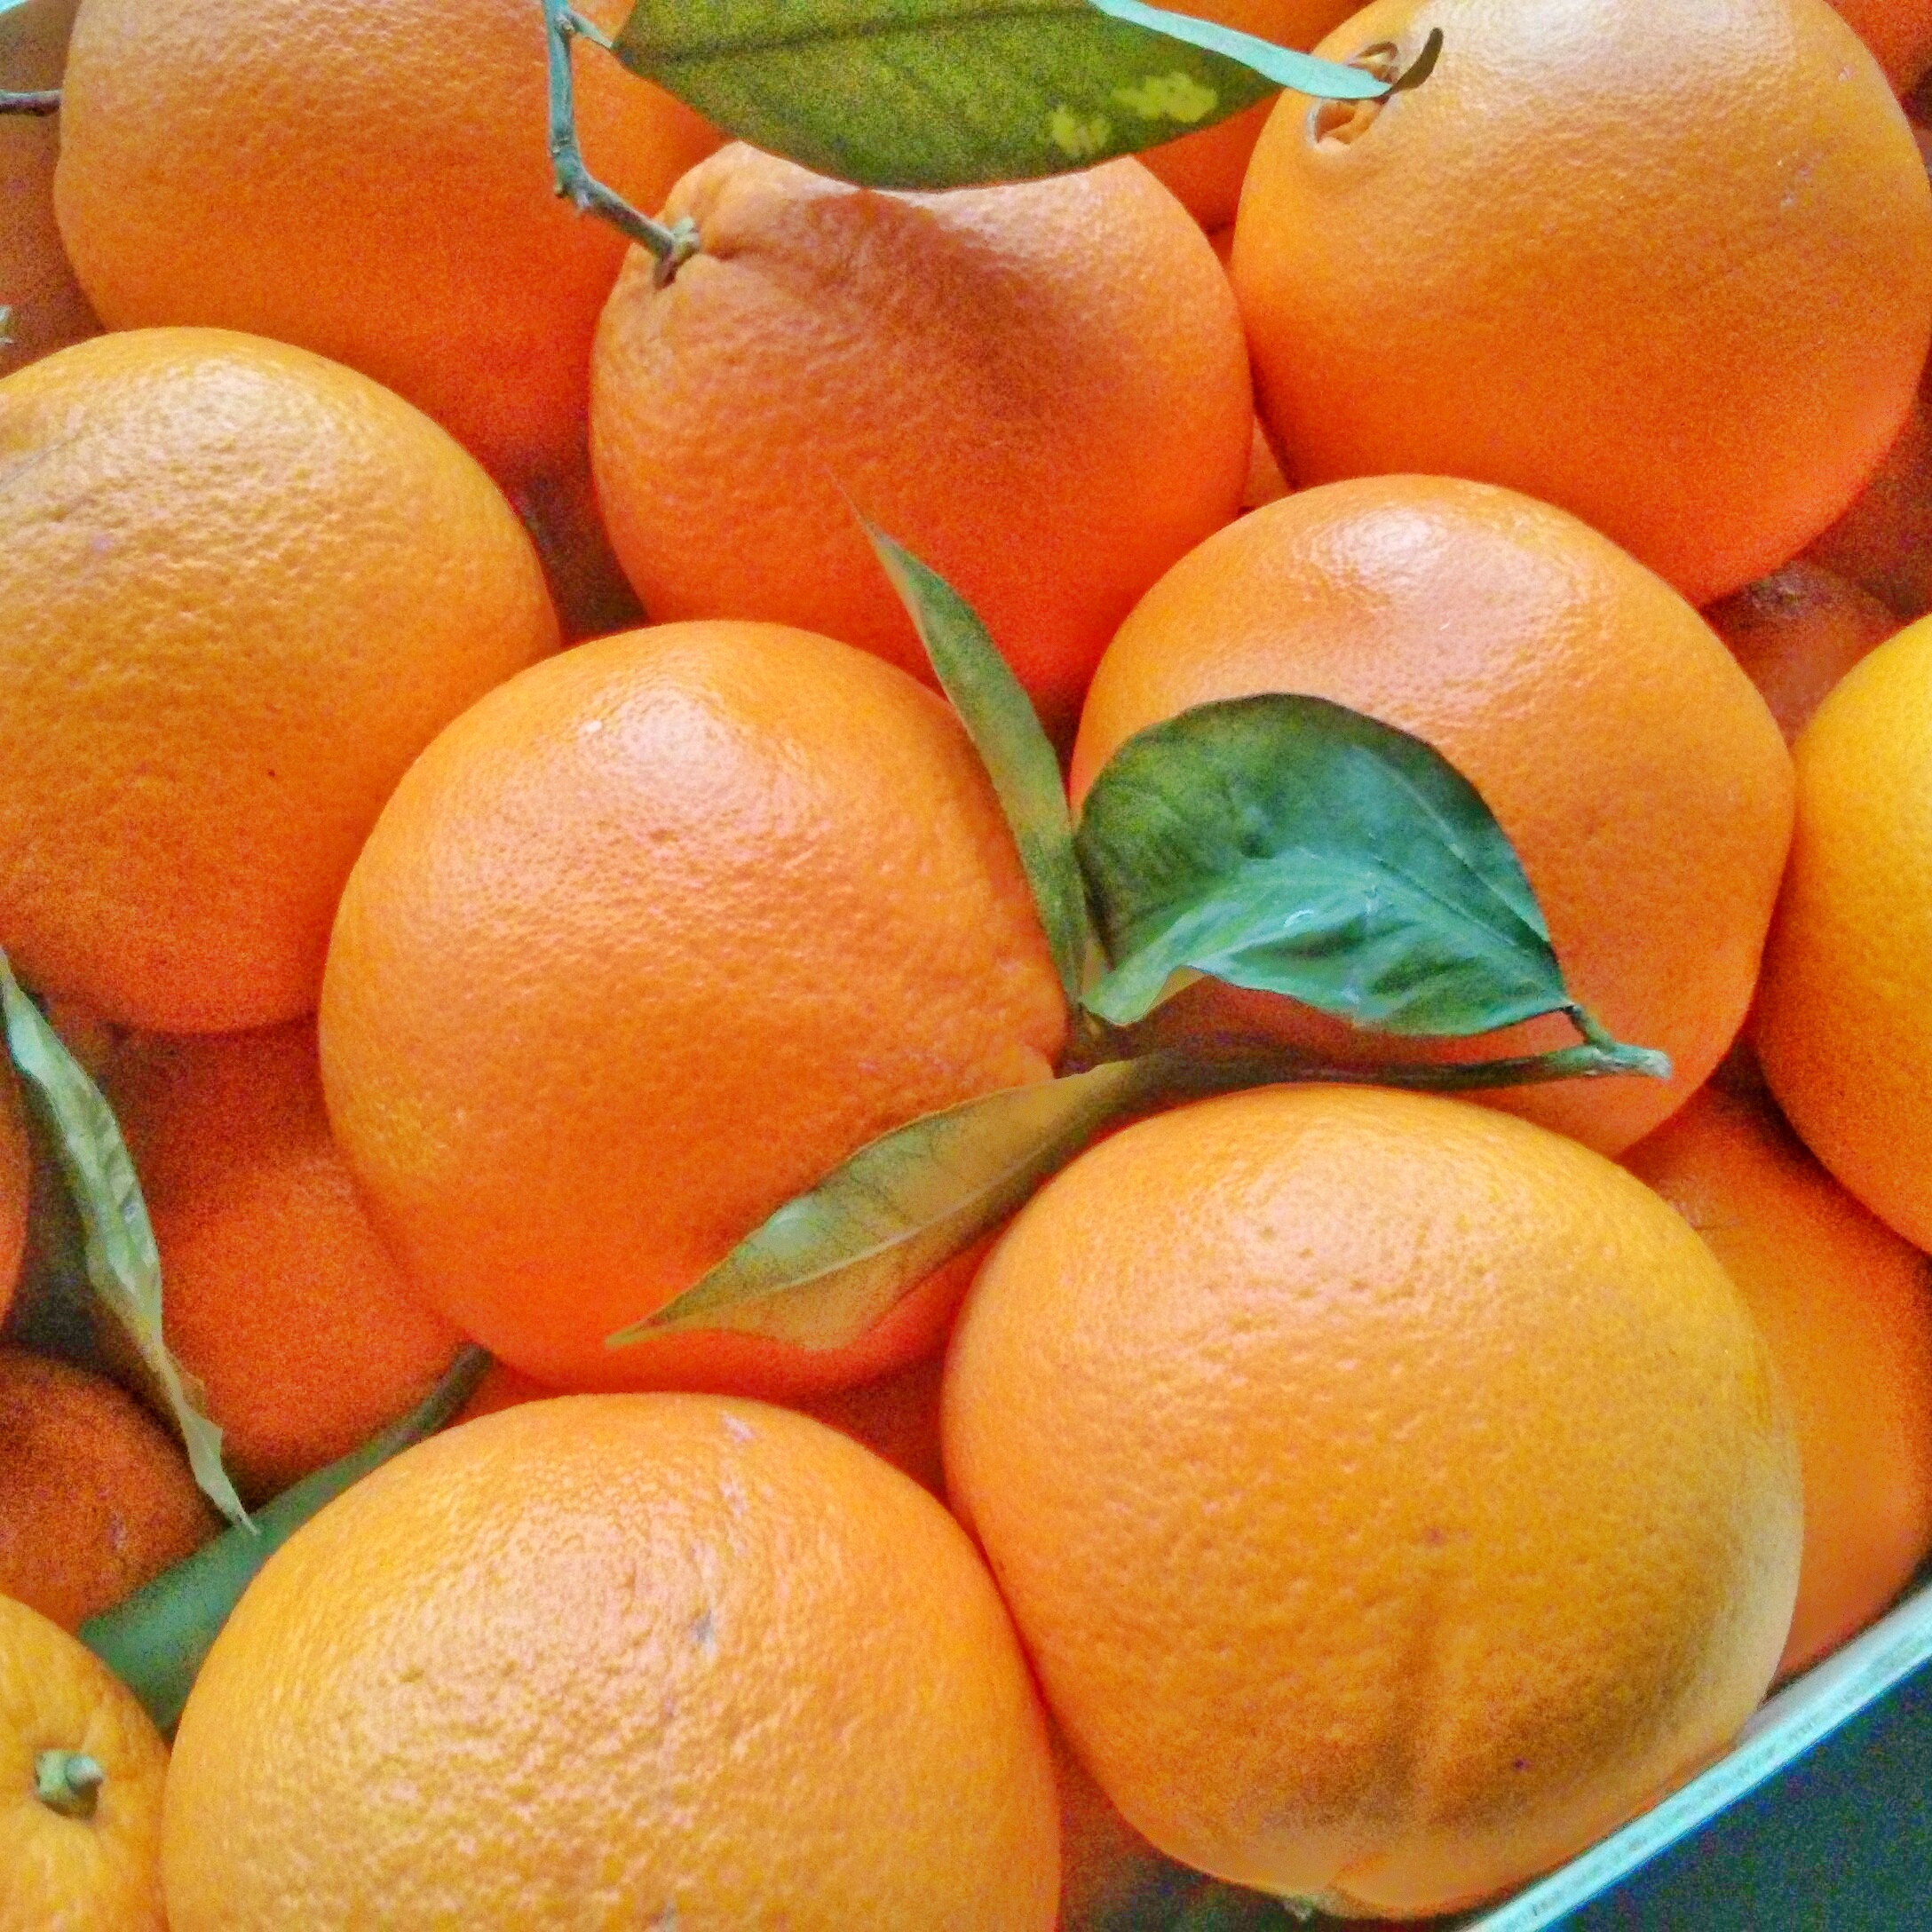 They like oranges. Апельсин лайк. Лайк оранжевый. Citruses in English. Like Orange.